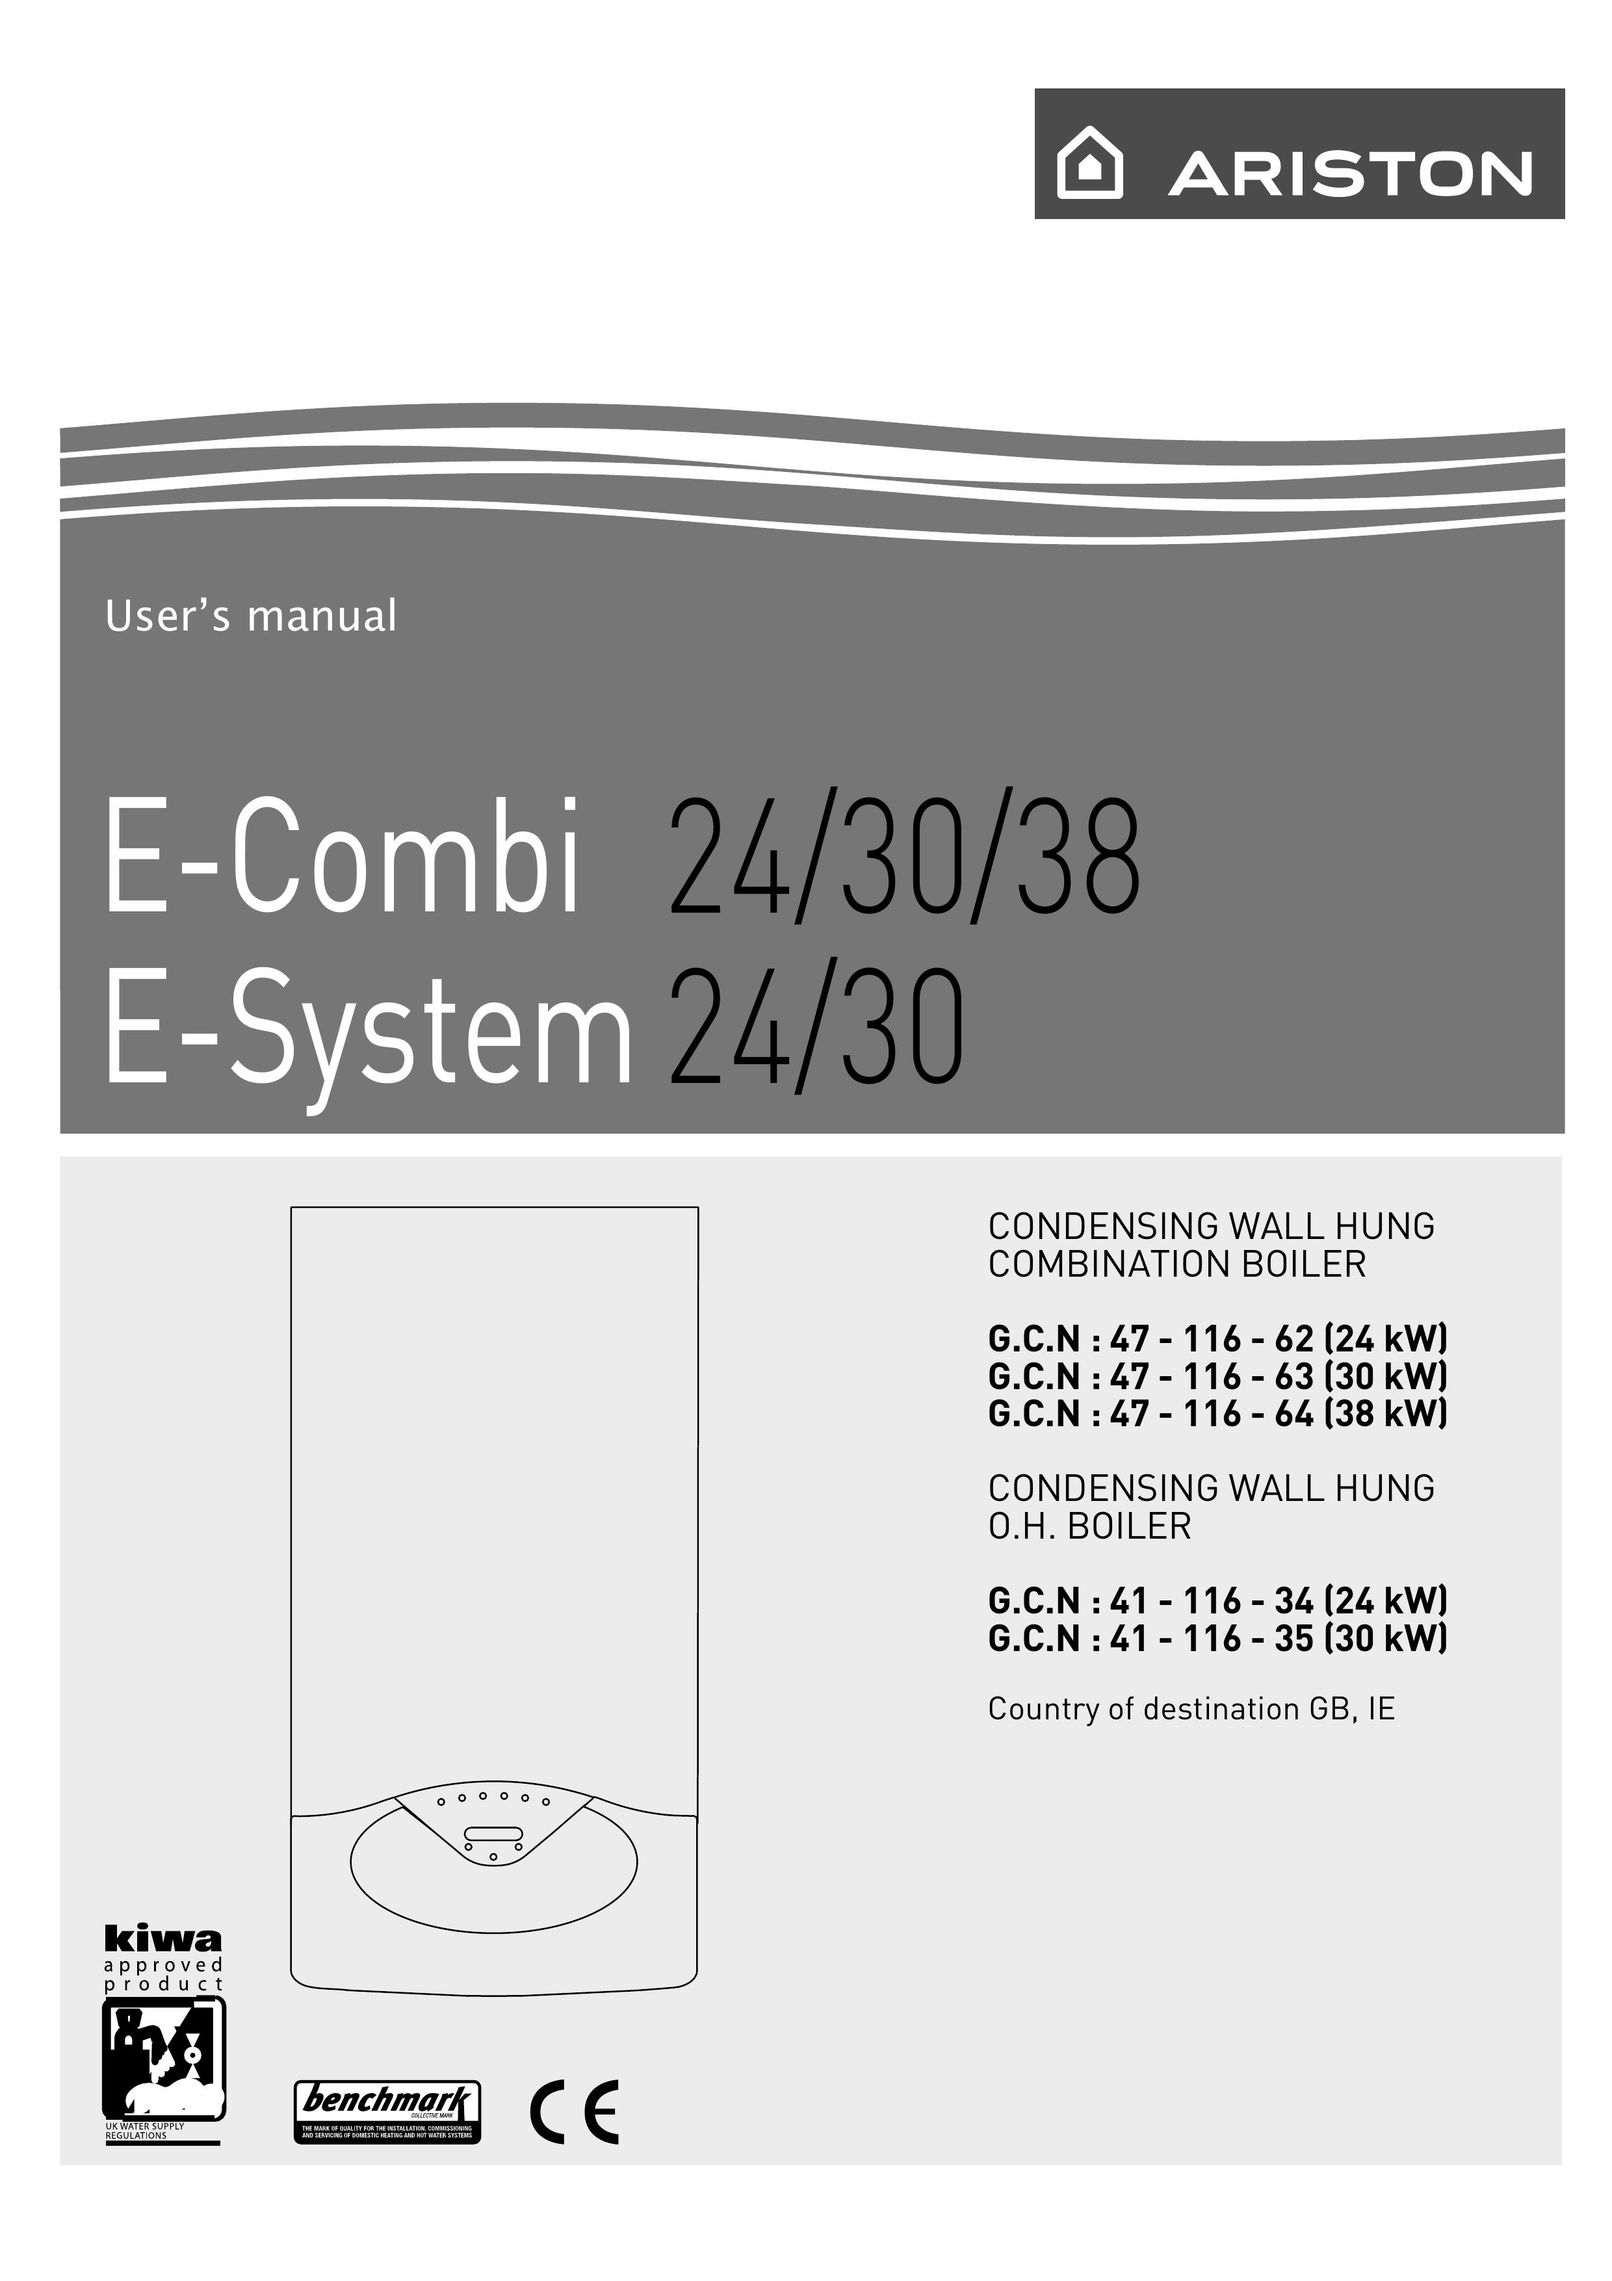 Ariston 41 - 116 - 34 Boiler User Manual